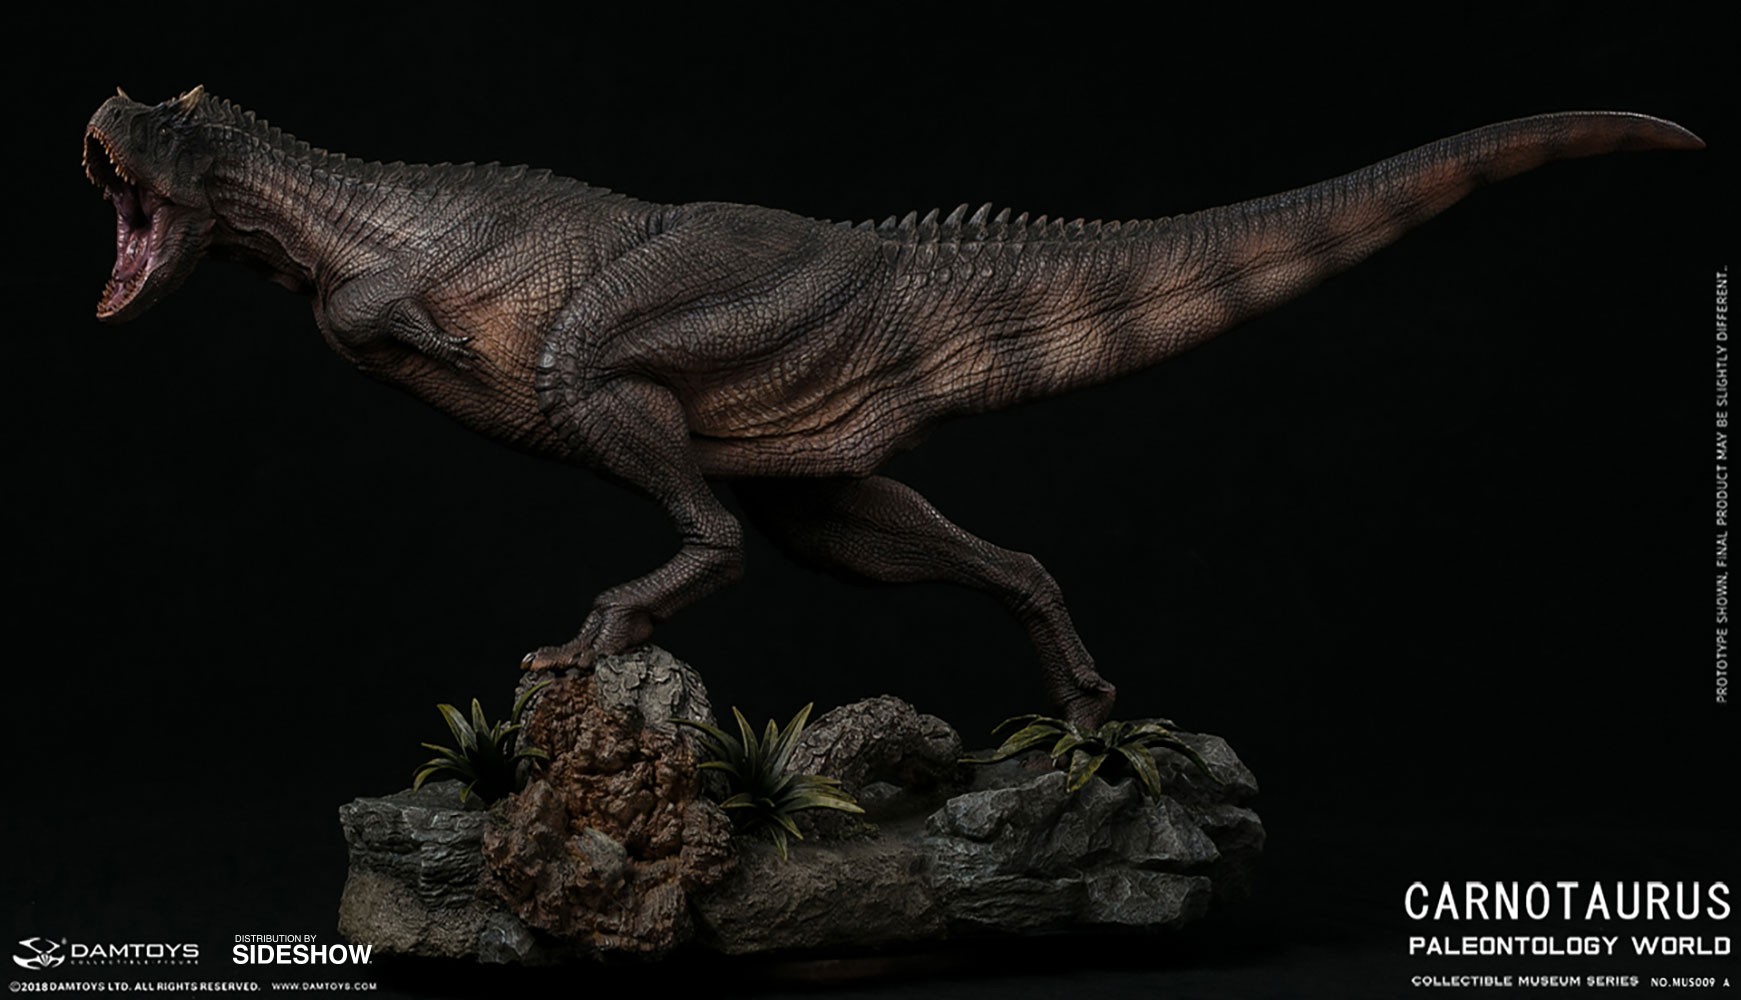 Carnotaurus Exclusive Edition (Prototype Shown) View 2